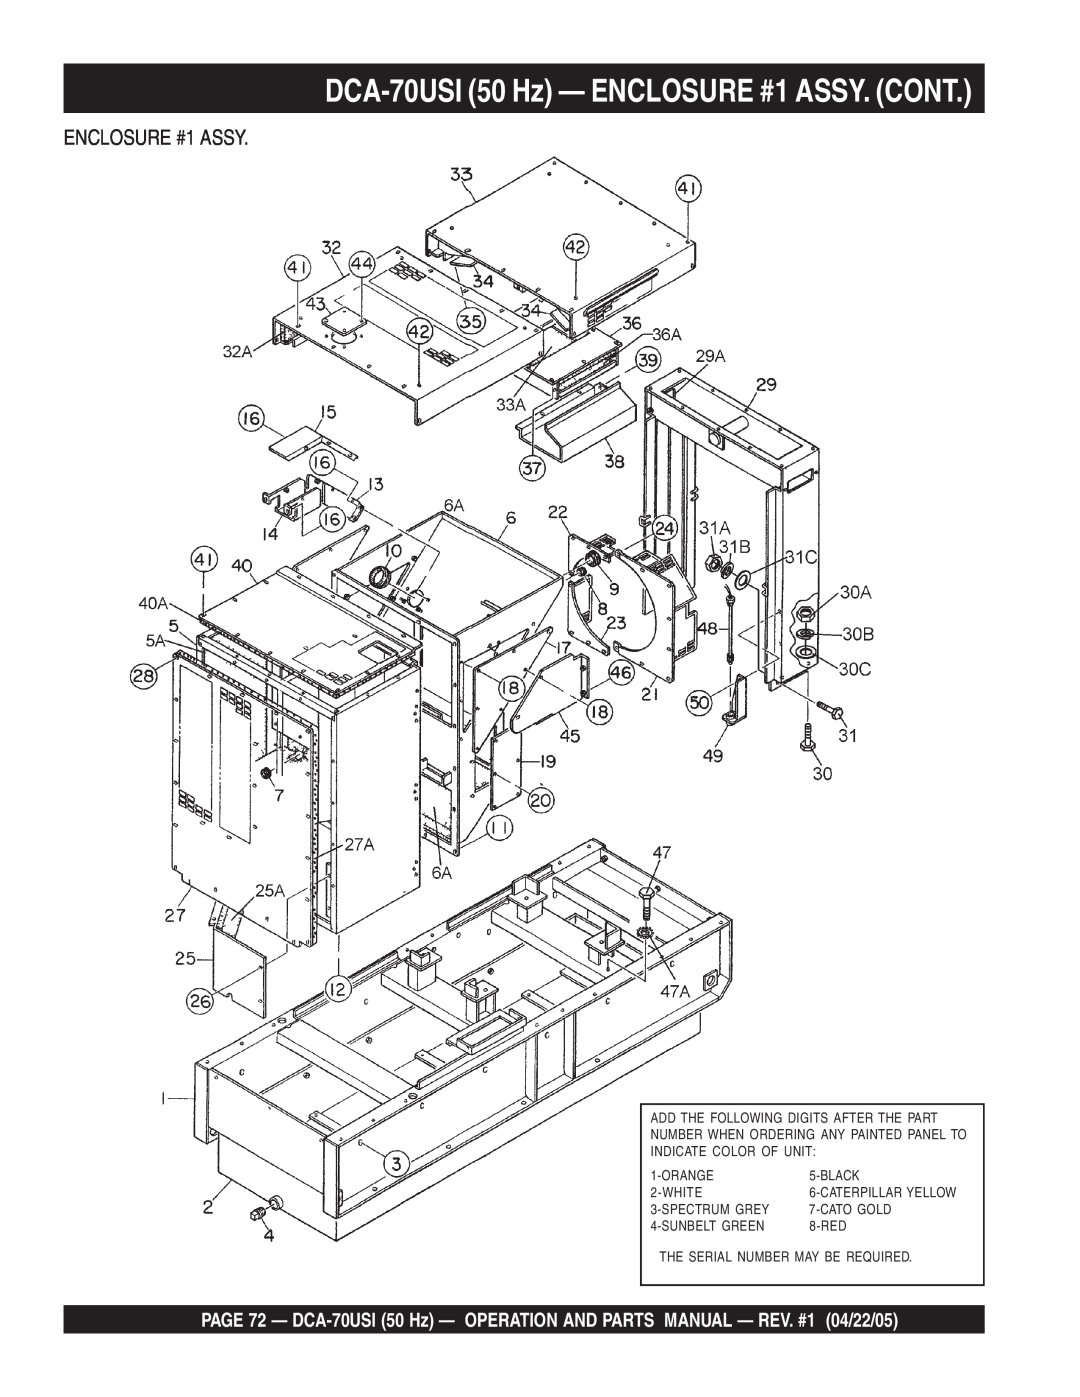 Multiquip operation manual DCA-70USI50 Hz — ENCLOSURE #1 ASSY. CONT 